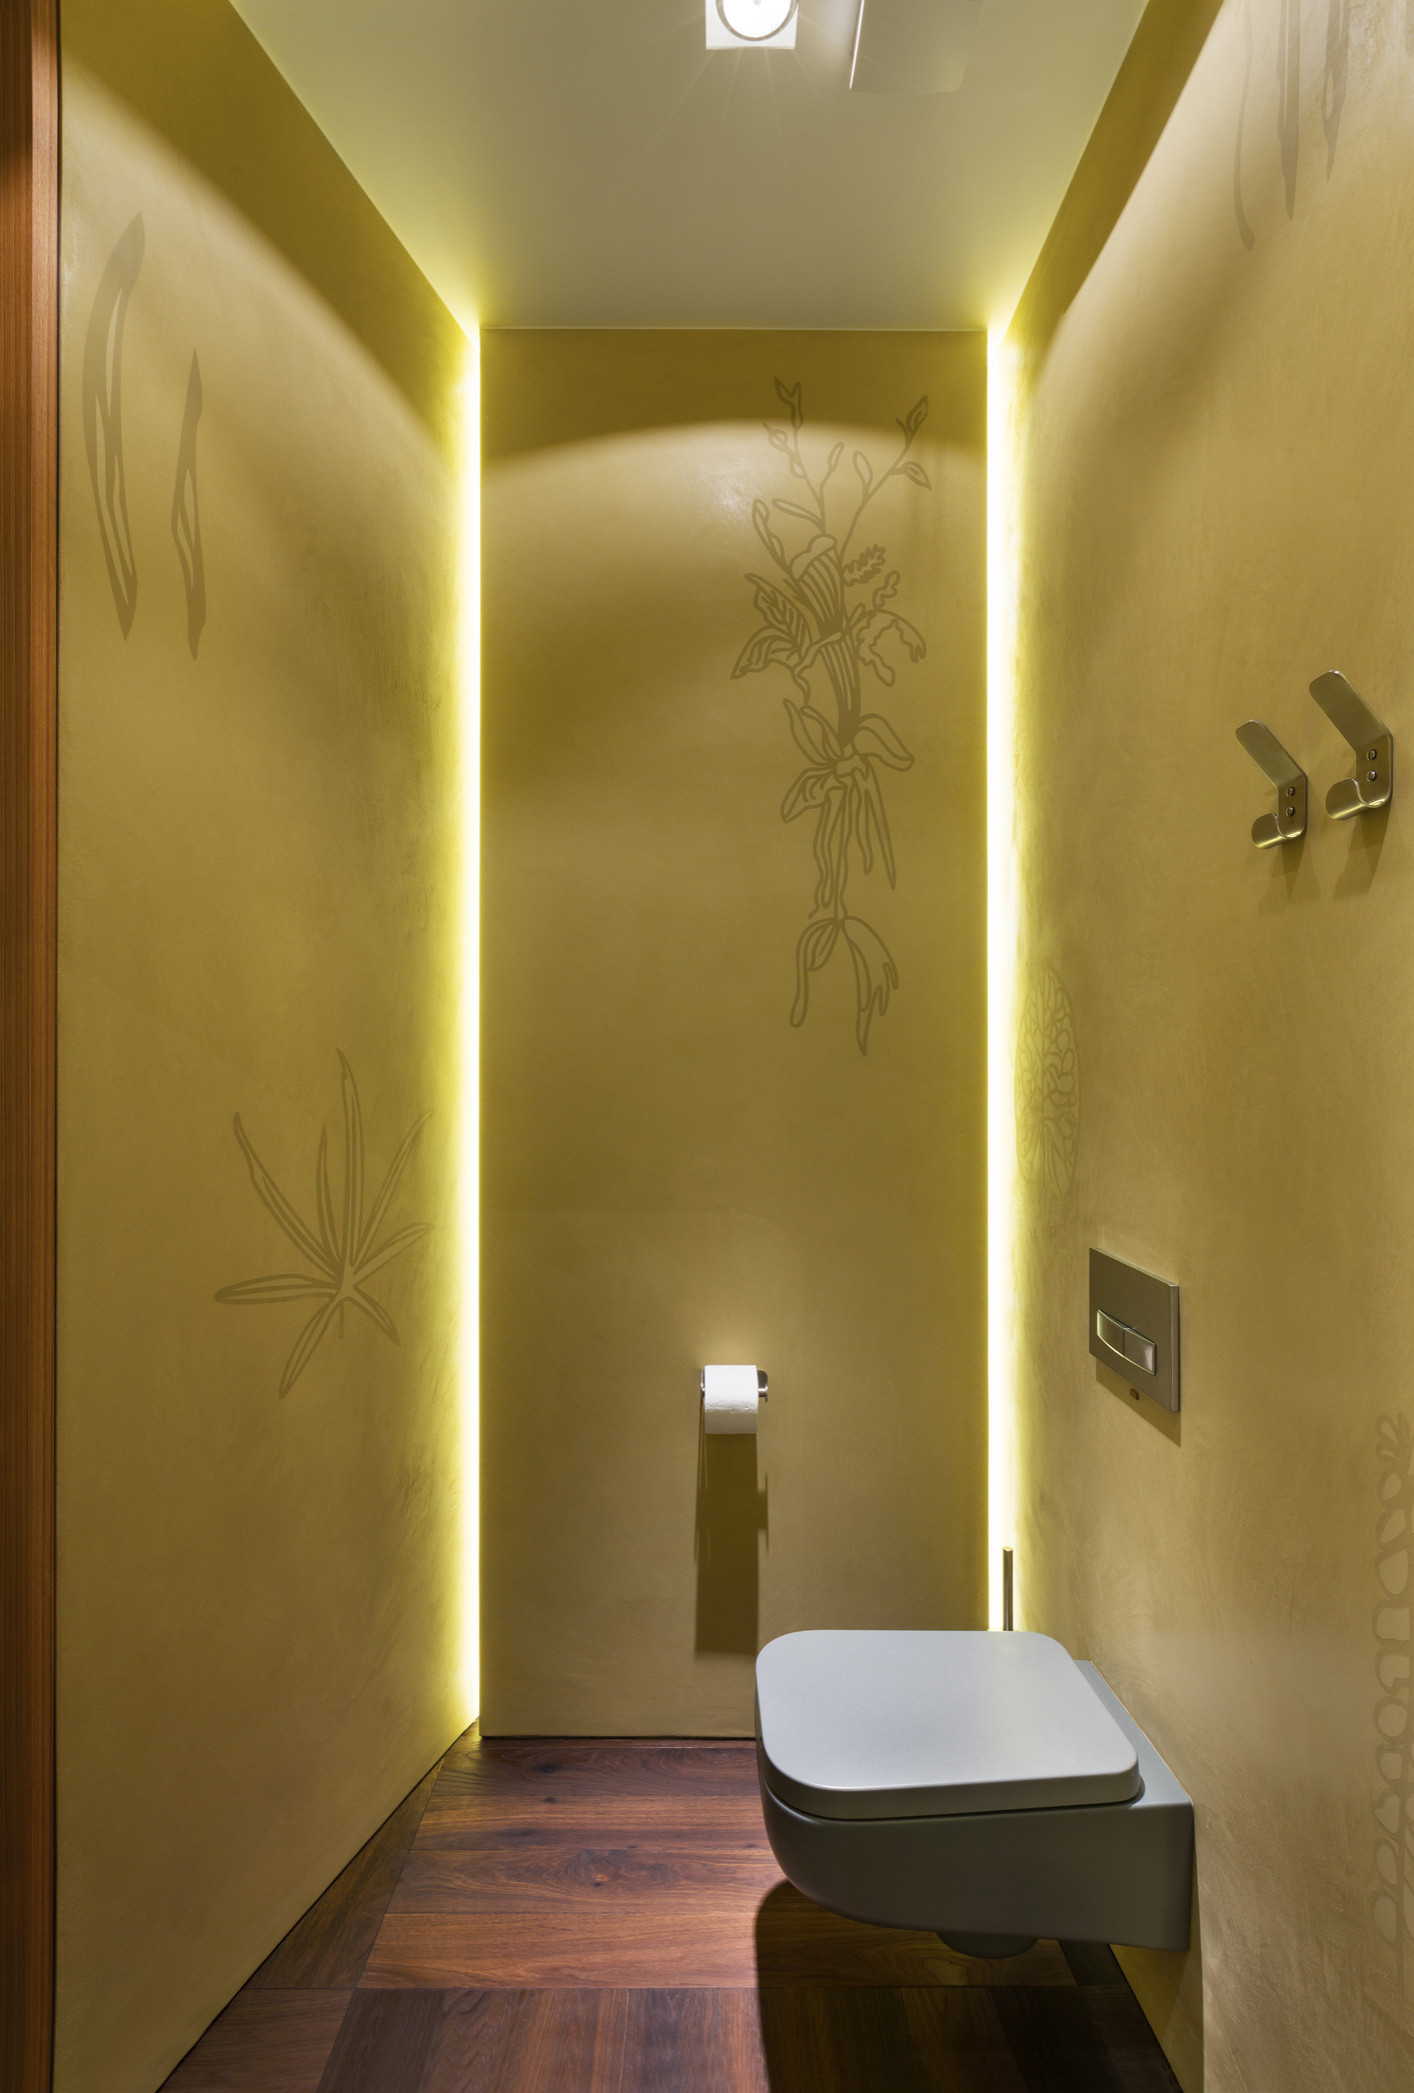 Дизайн интерьера туалета (санузла)